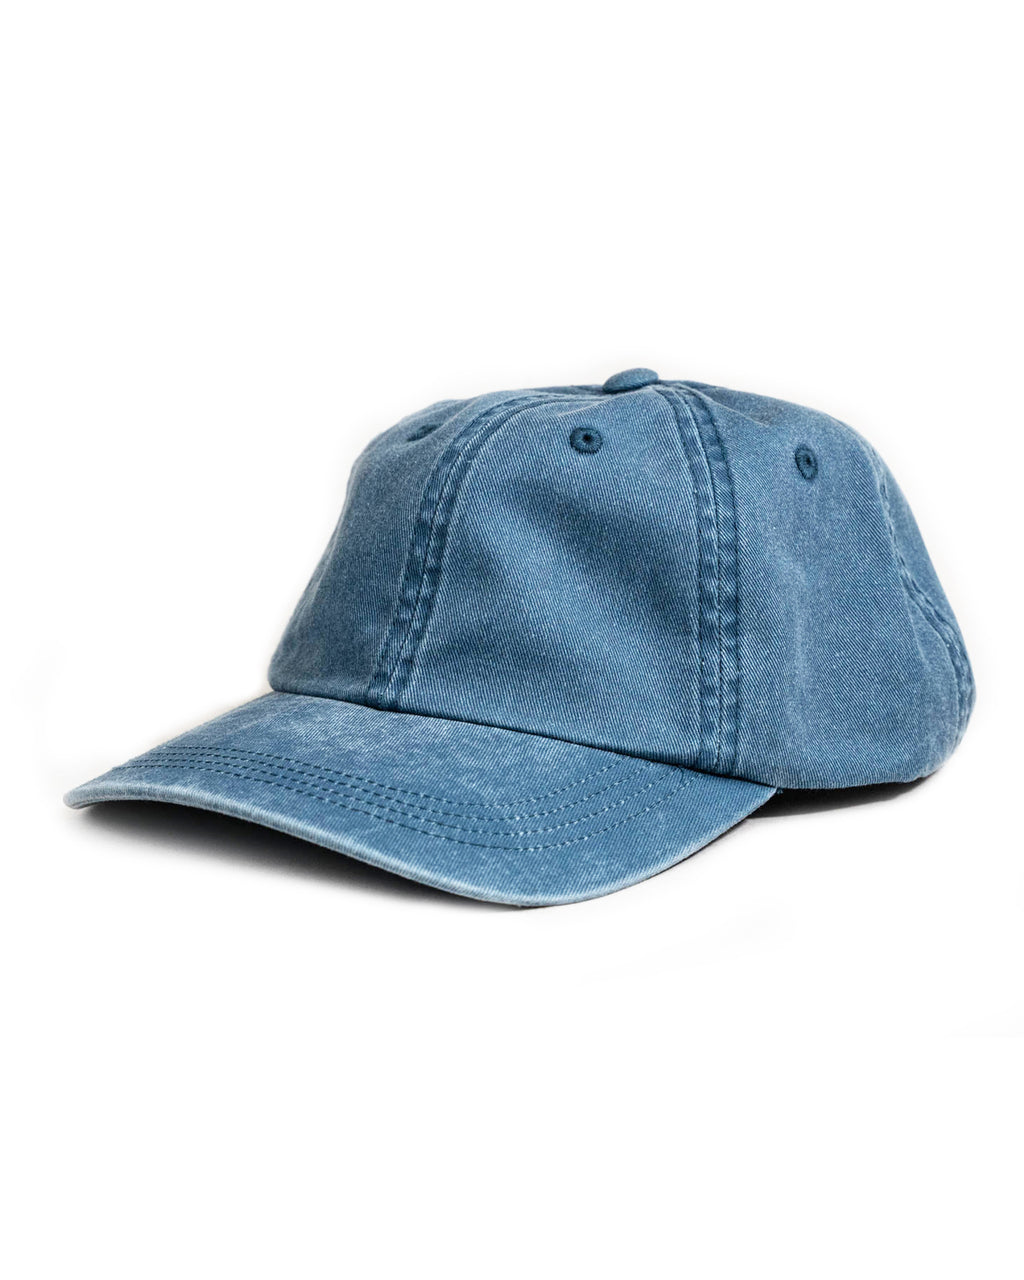 ANIAN, The Coach Hat, 100% Cotton